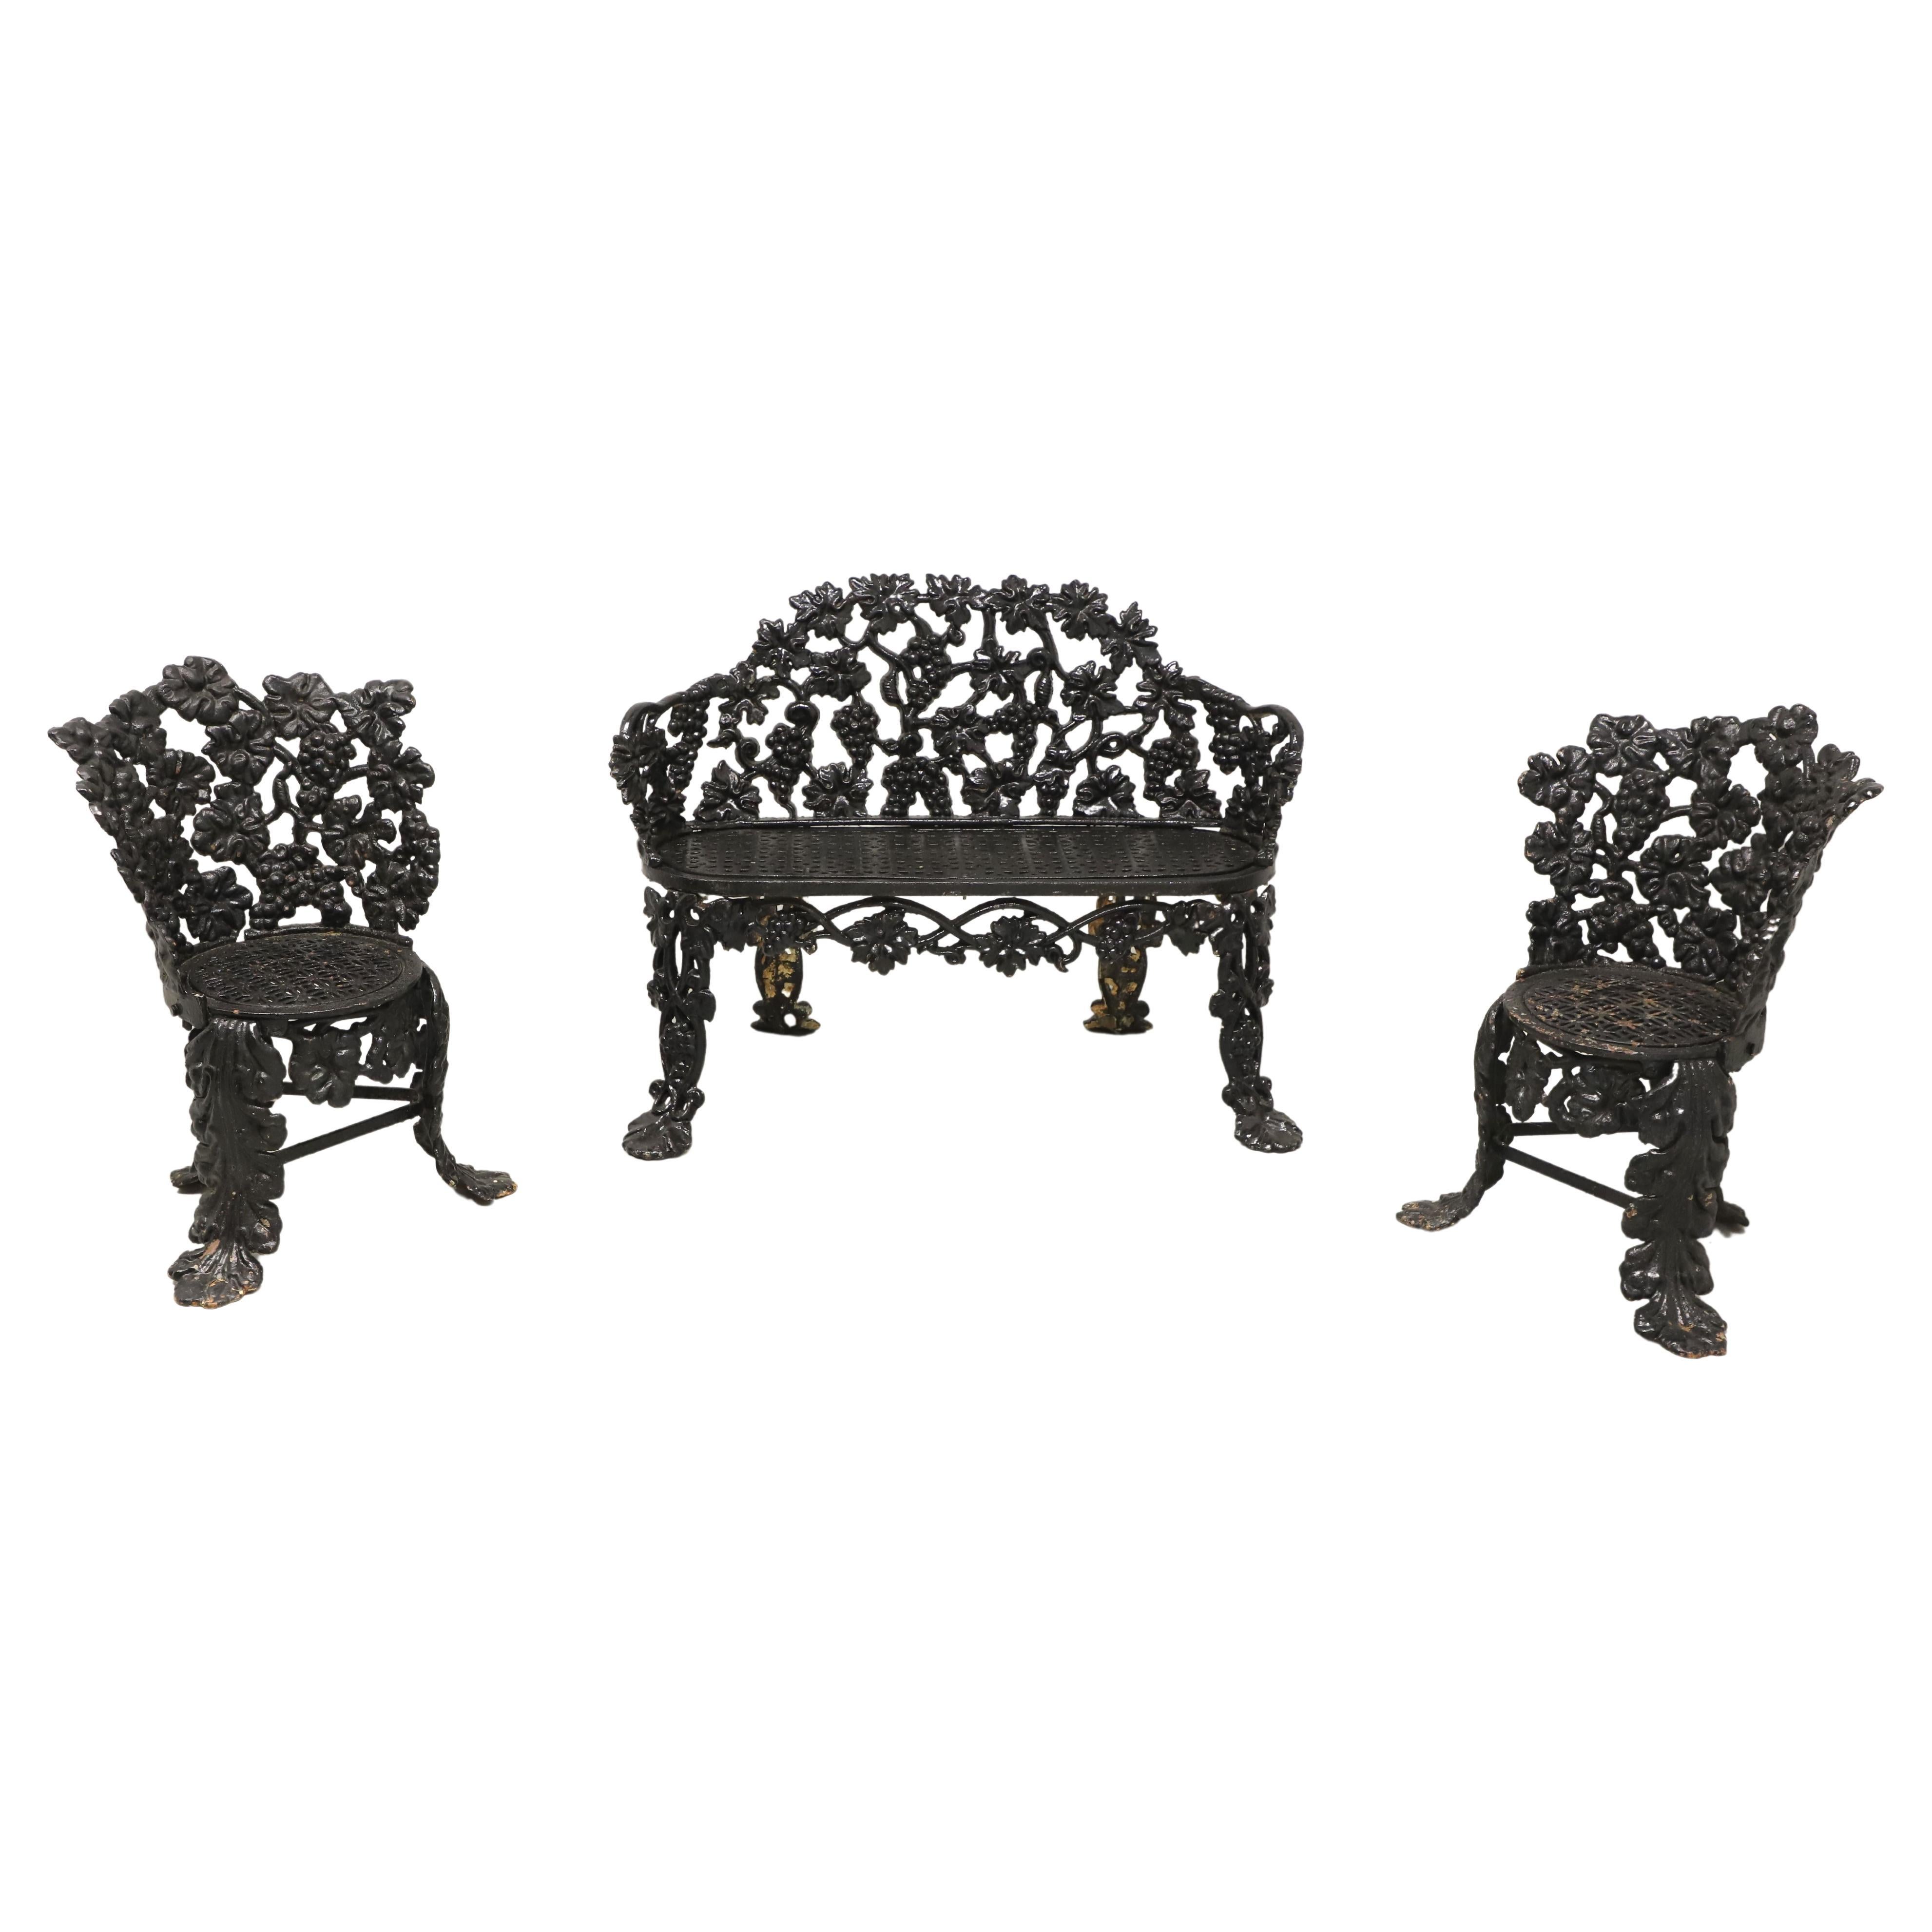 Antique Victorian Cast Iron Grape Leaf Garden Bench & Chairs - 3 Piece Set